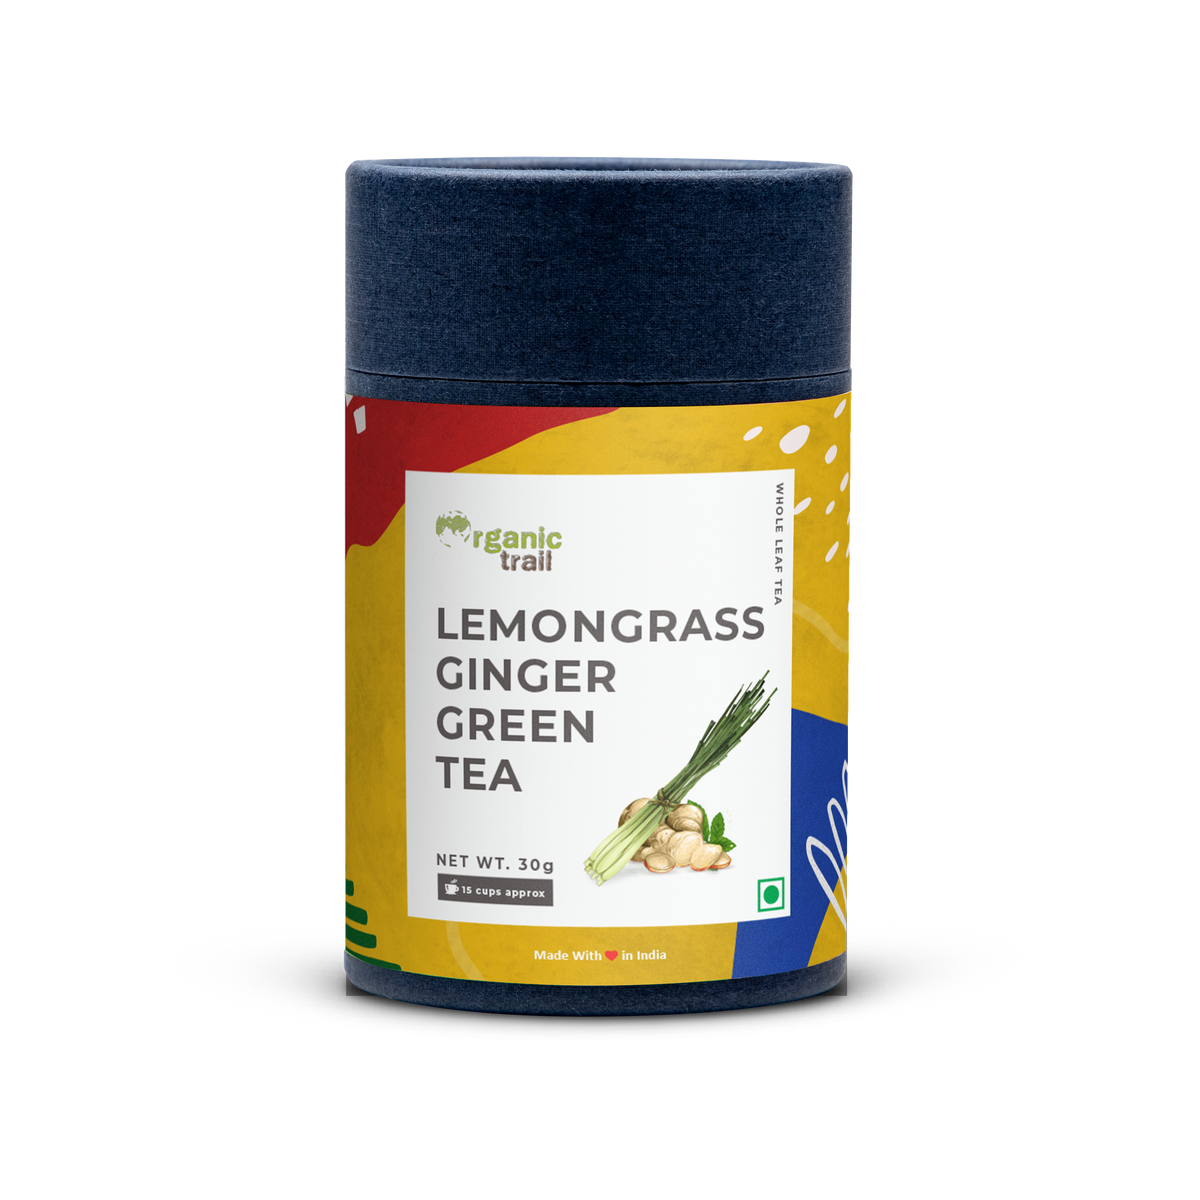 Lemongrass Ginger Green Tea(whole leaf green tea)